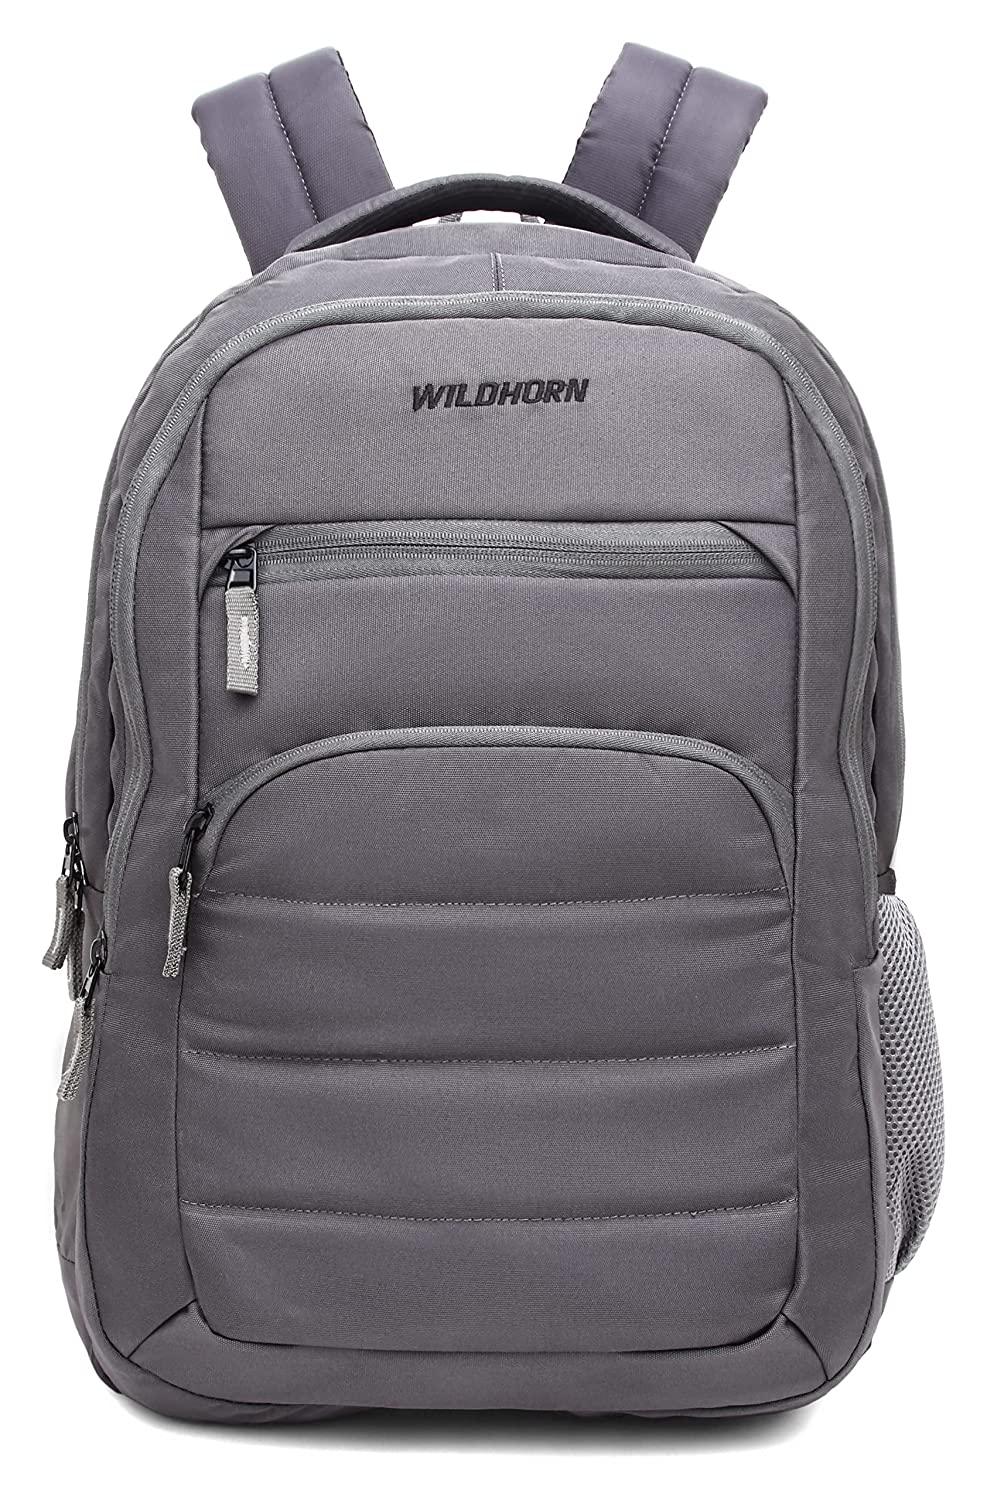 TL Bag Leather Backpack for Women Light Grey TL142211